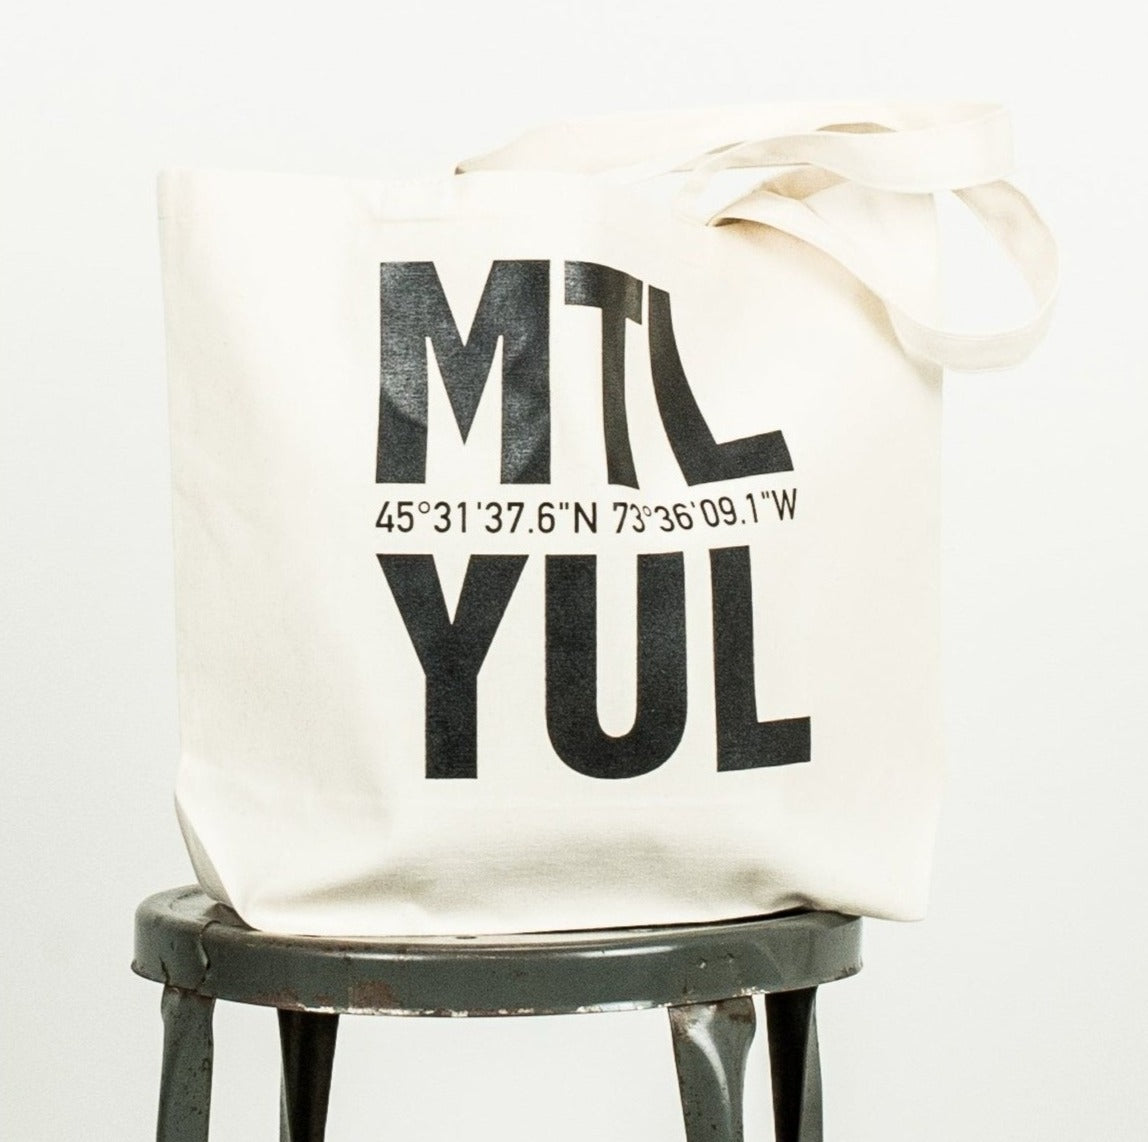 Cotton Tote Bag - MTL/YUL